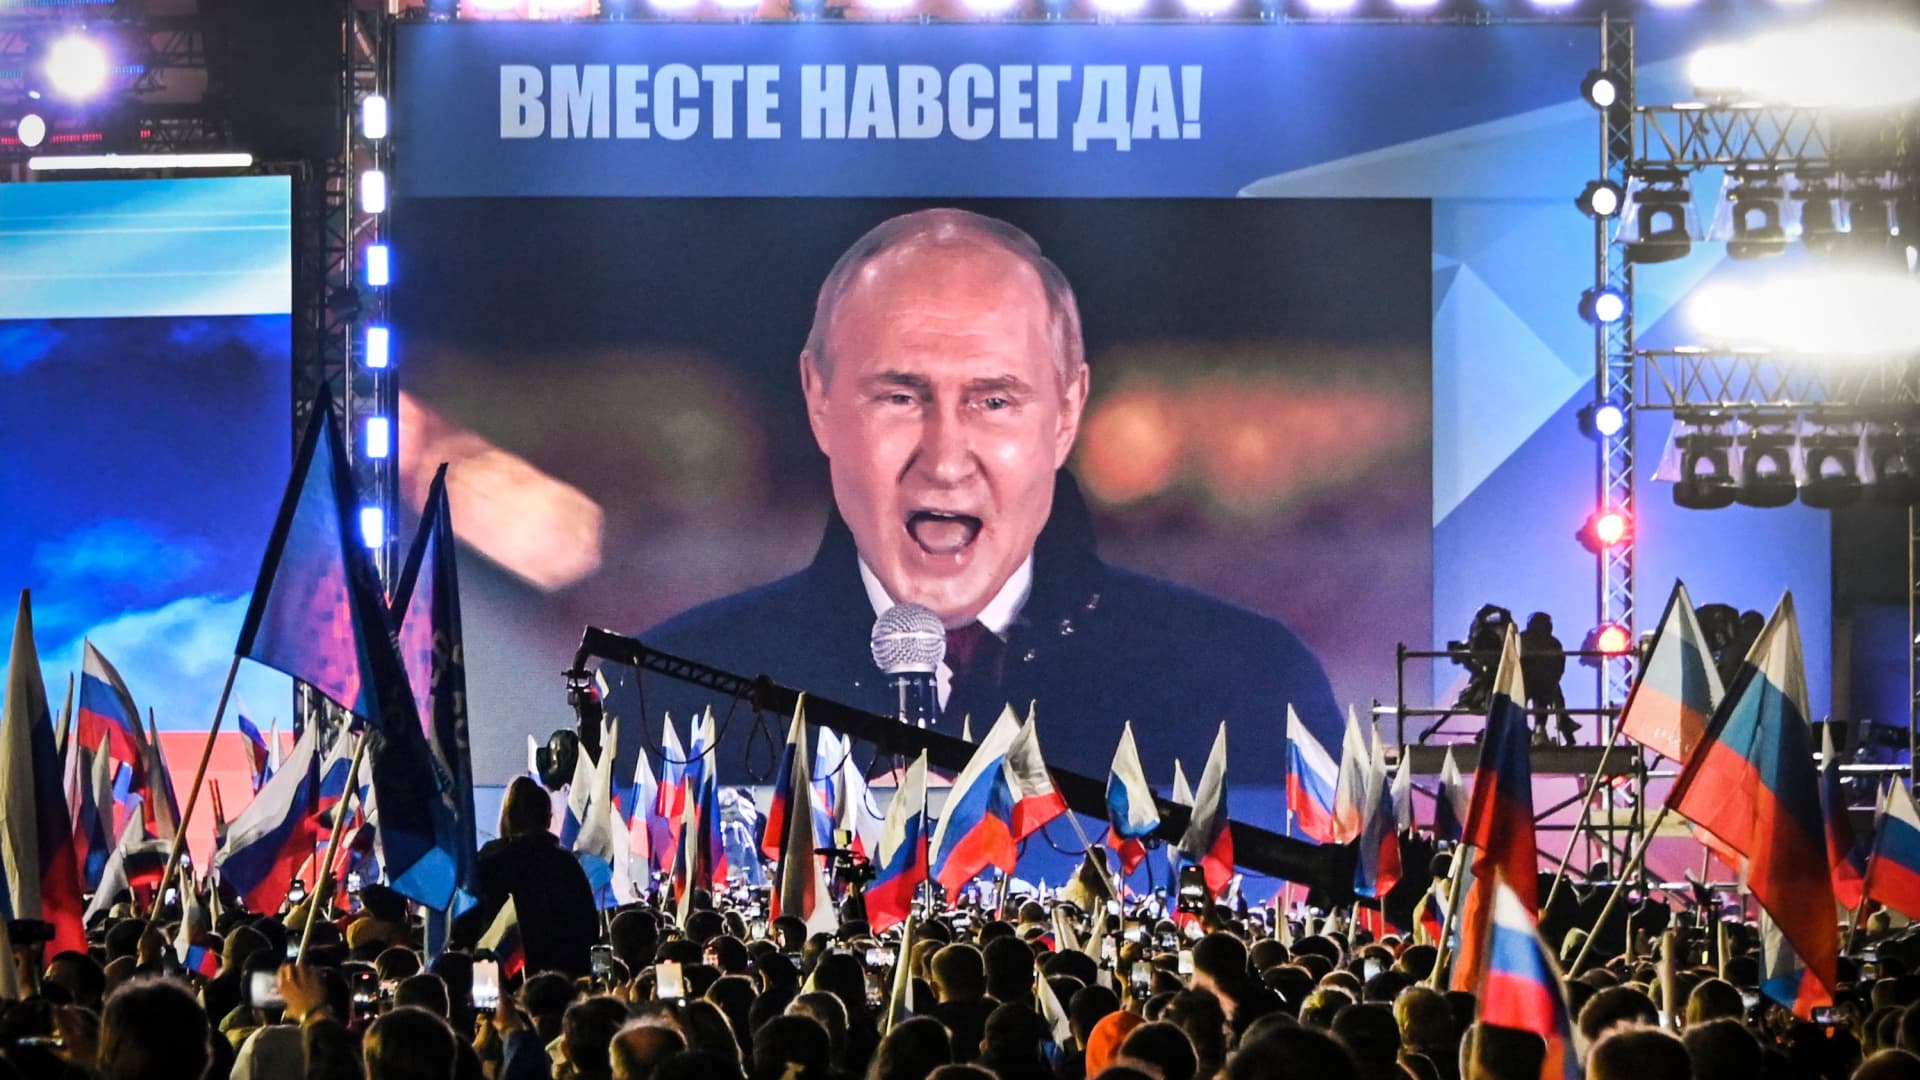 Putin’s supporters call for the liquidation of Ukraine as ‘genocidal rhetoric’ s..